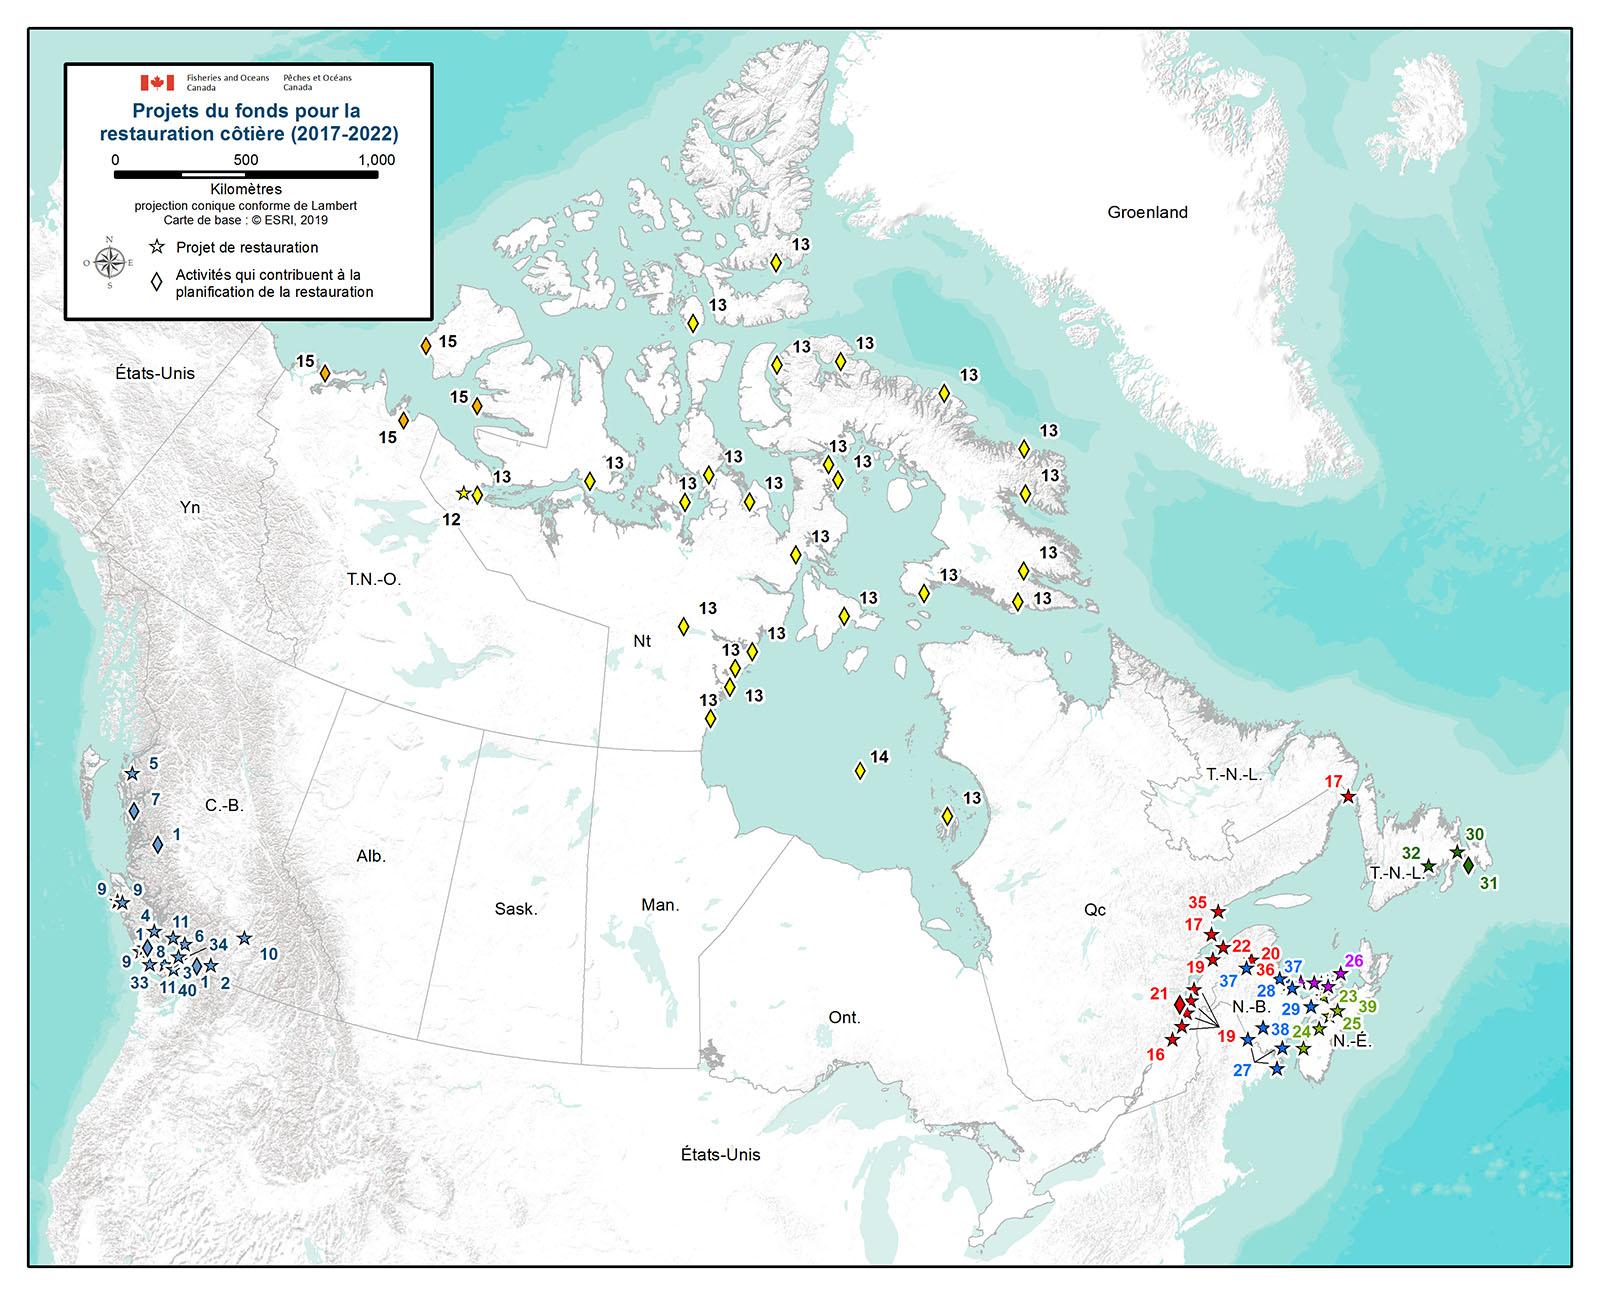 Carte du Canada avec les projets financés identifiés.